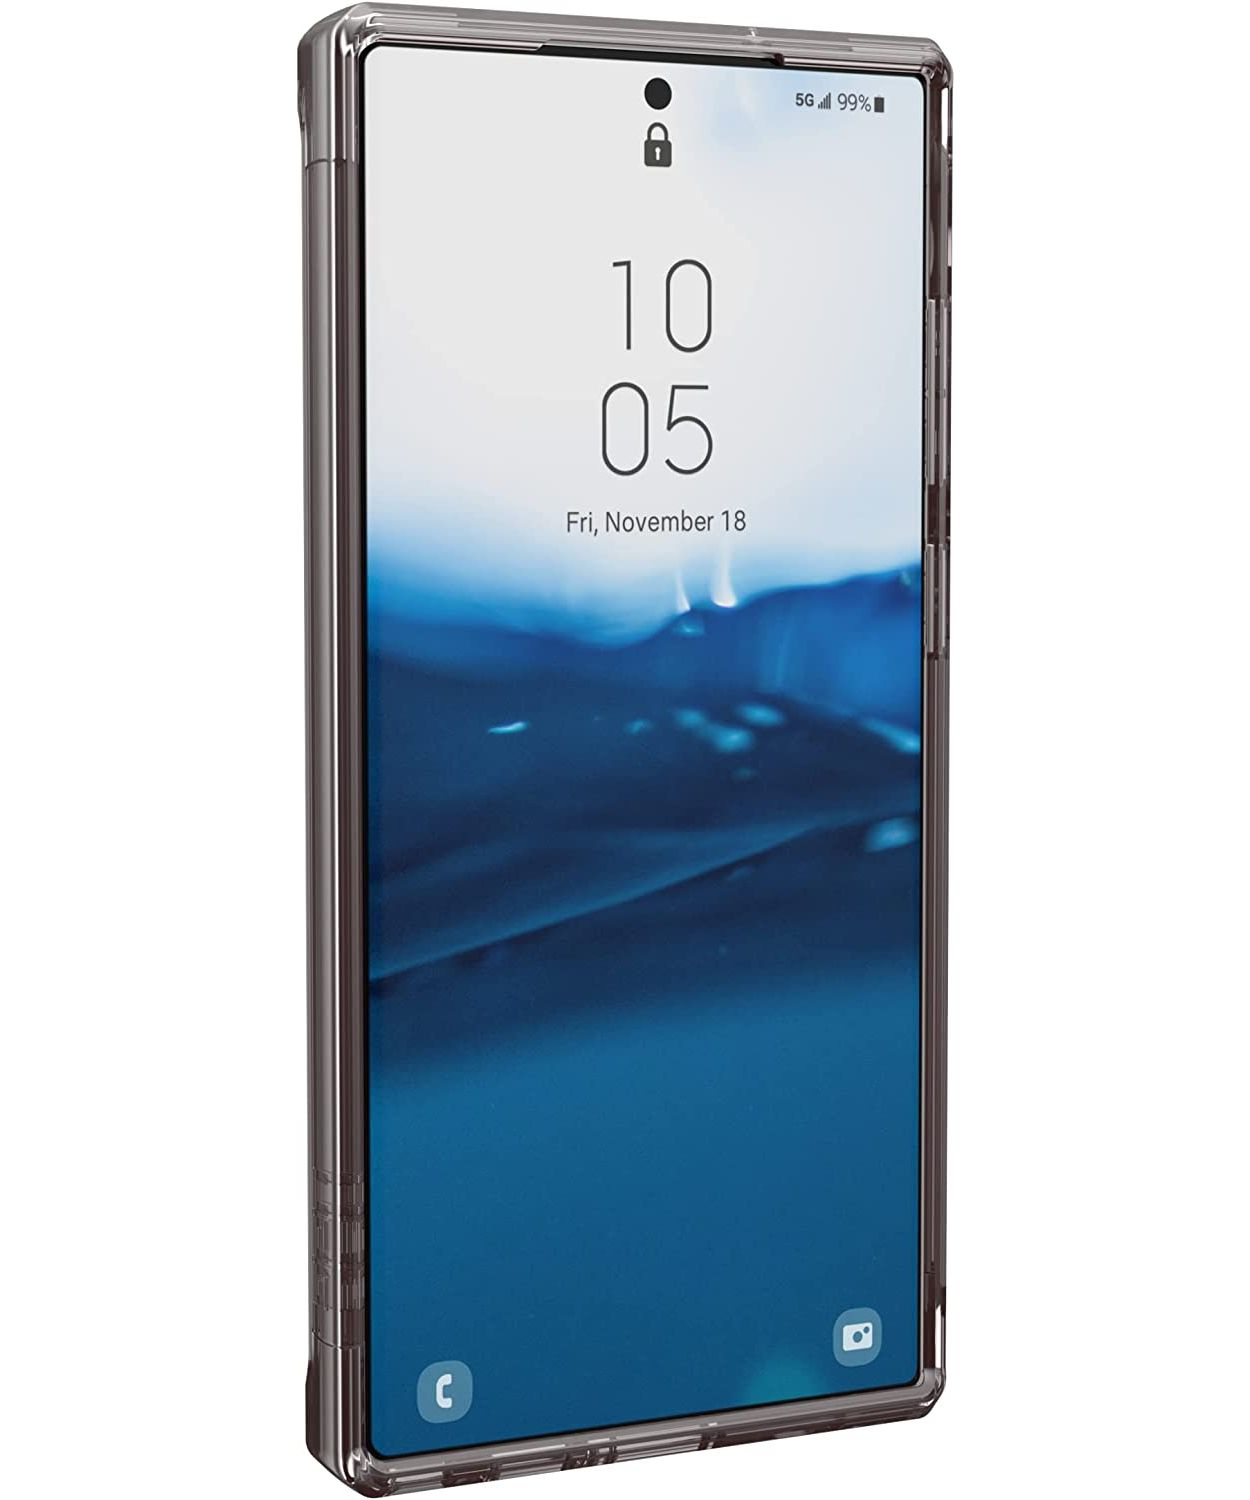 5G, (grau Galaxy ash Backcover, transparent) Ultra GEAR URBAN S23 ARMOR Samsung, Plyo,